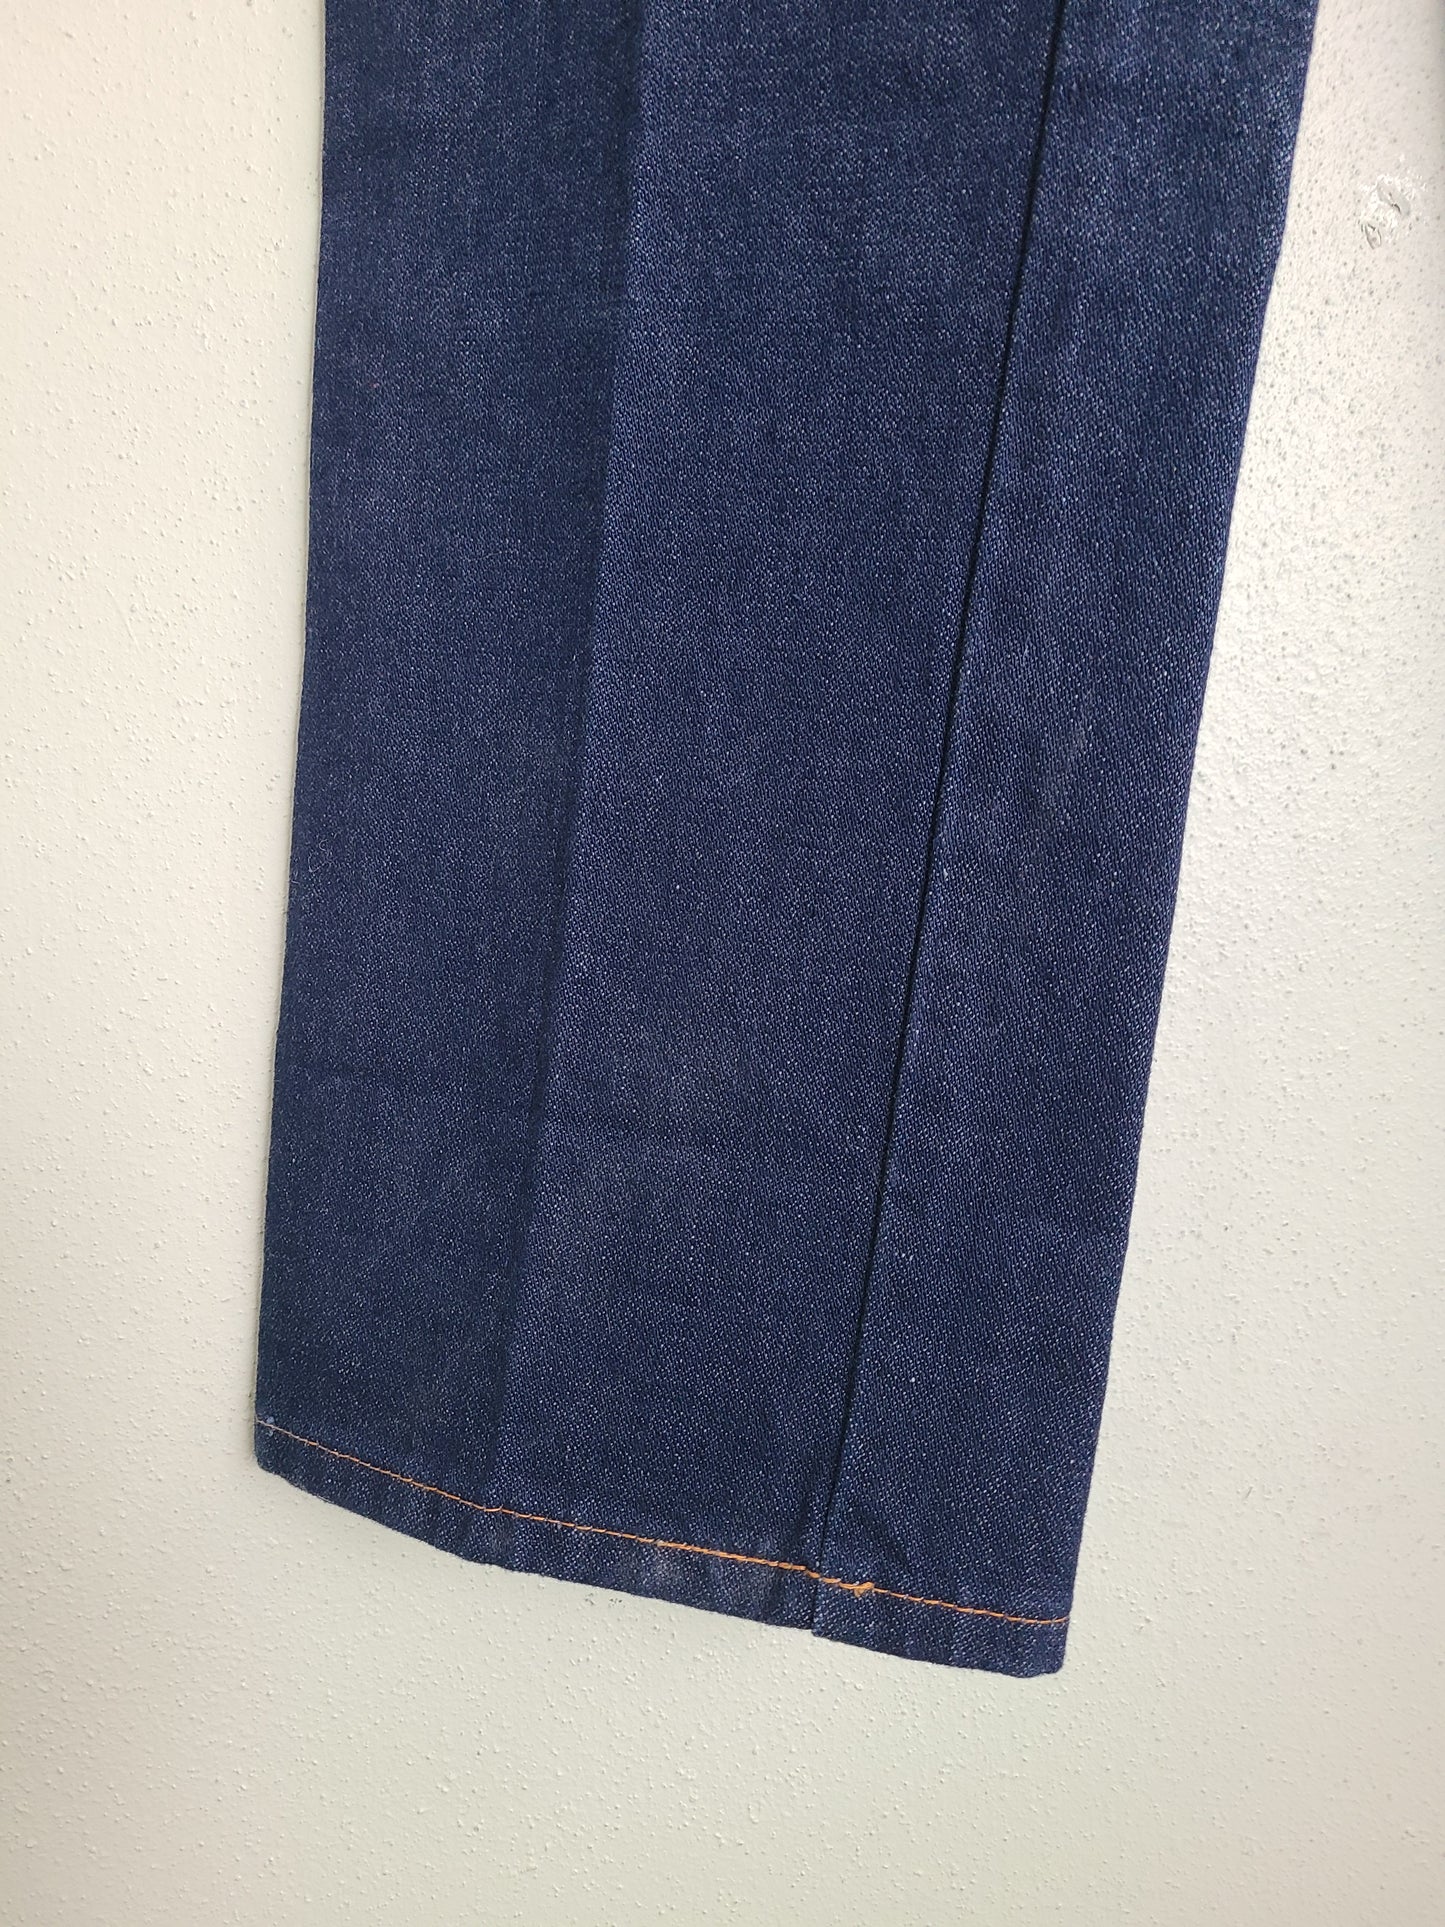 The Joan Dark Wash High Waisted GwG Jeans 36 x 32